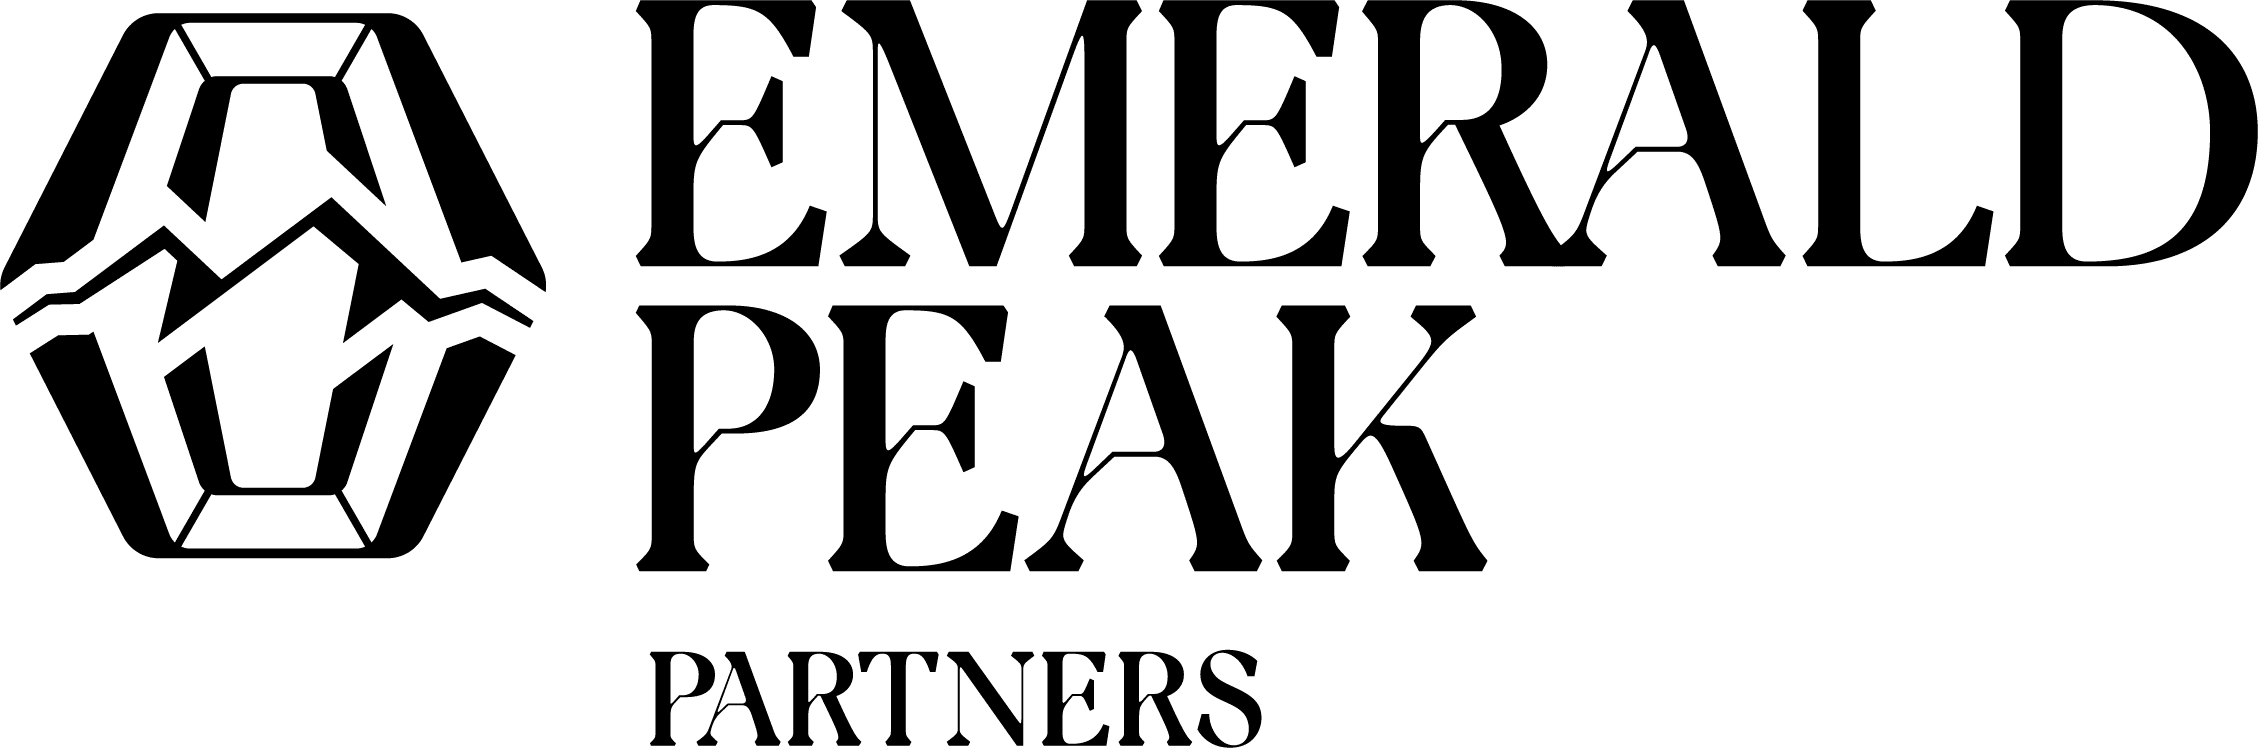 Emerald Peak Partners